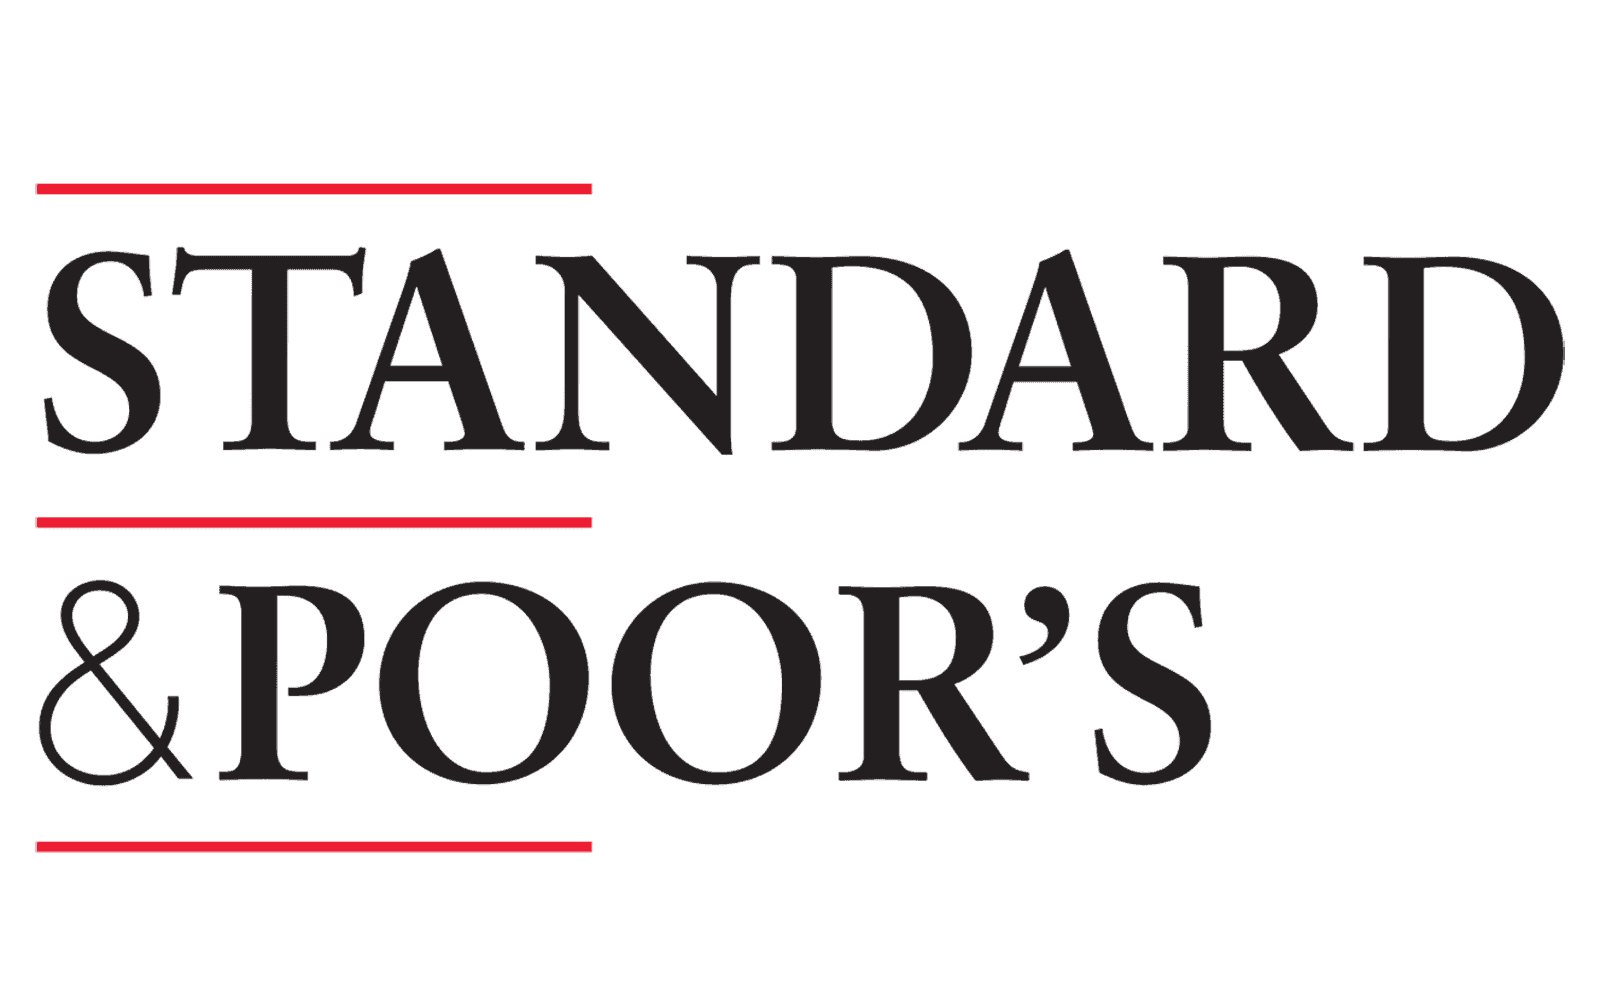 Standard and poors logo. Standard & poor’s. Standard poor s логотип. S P 500 лого. P s p ss